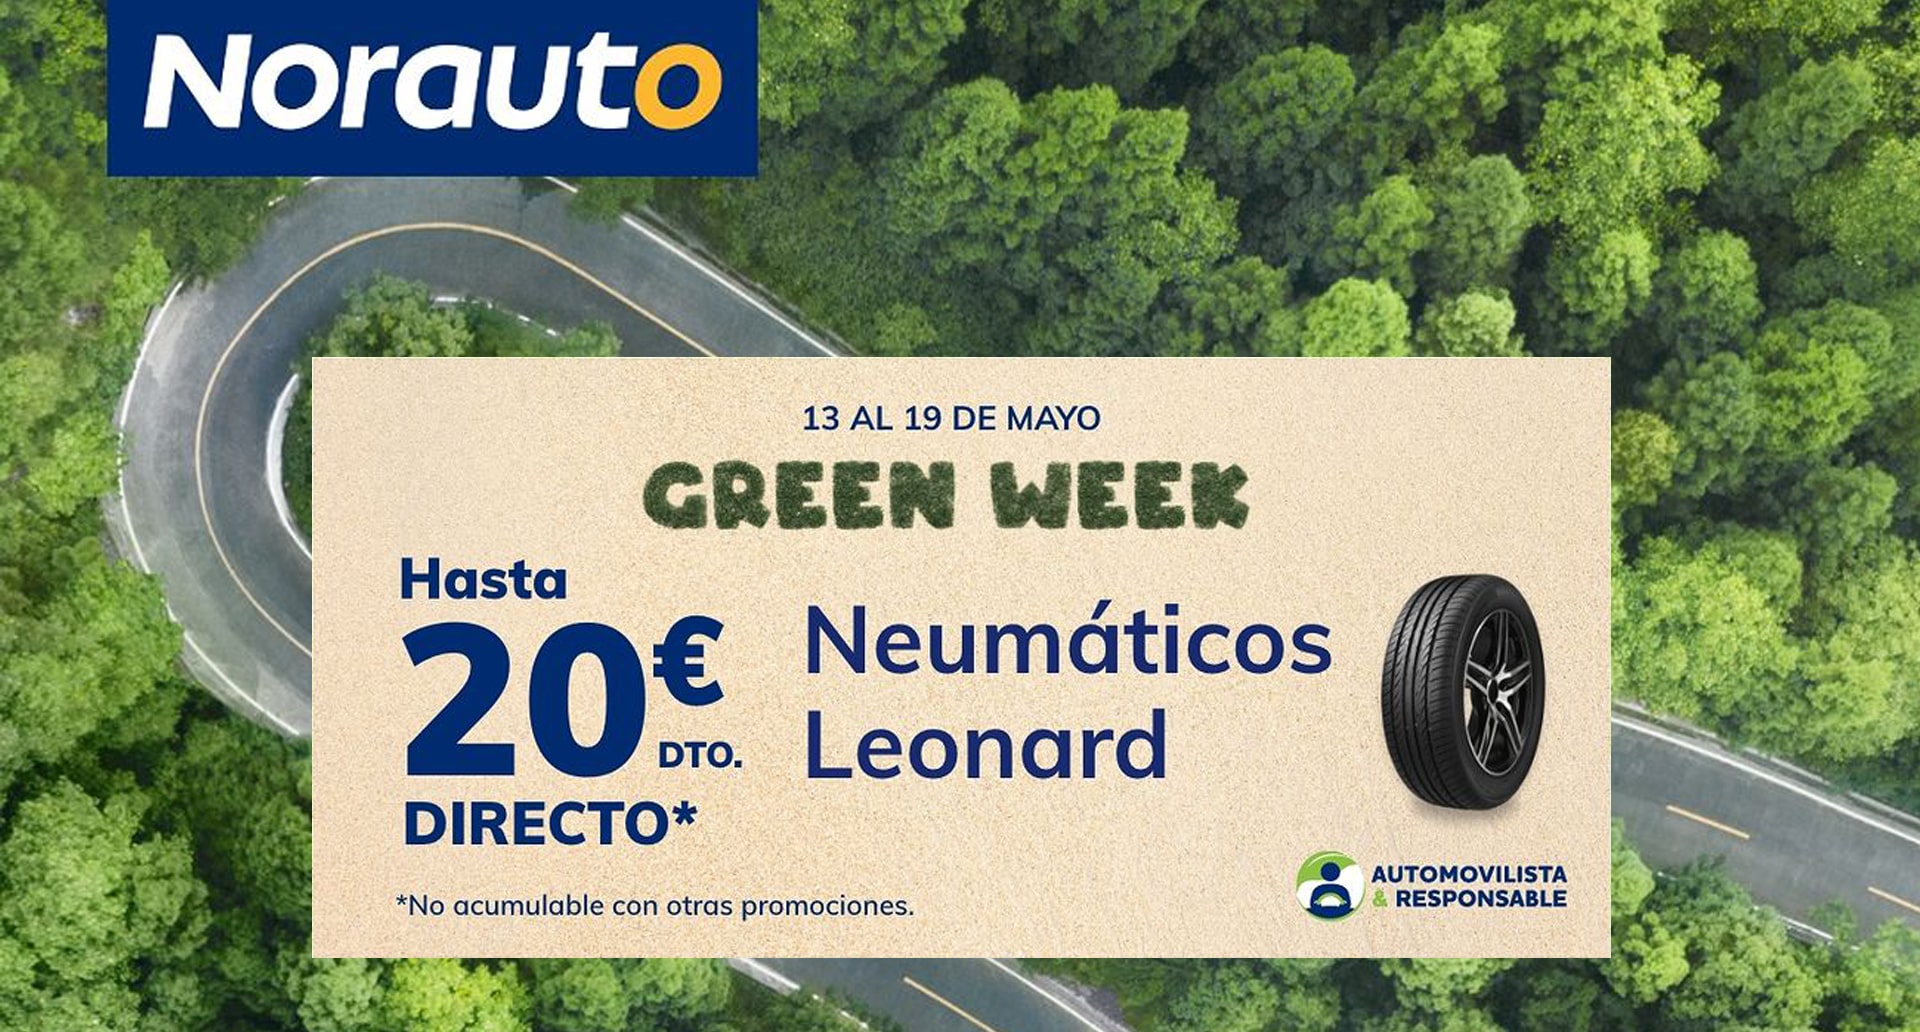 Norauto Green Week